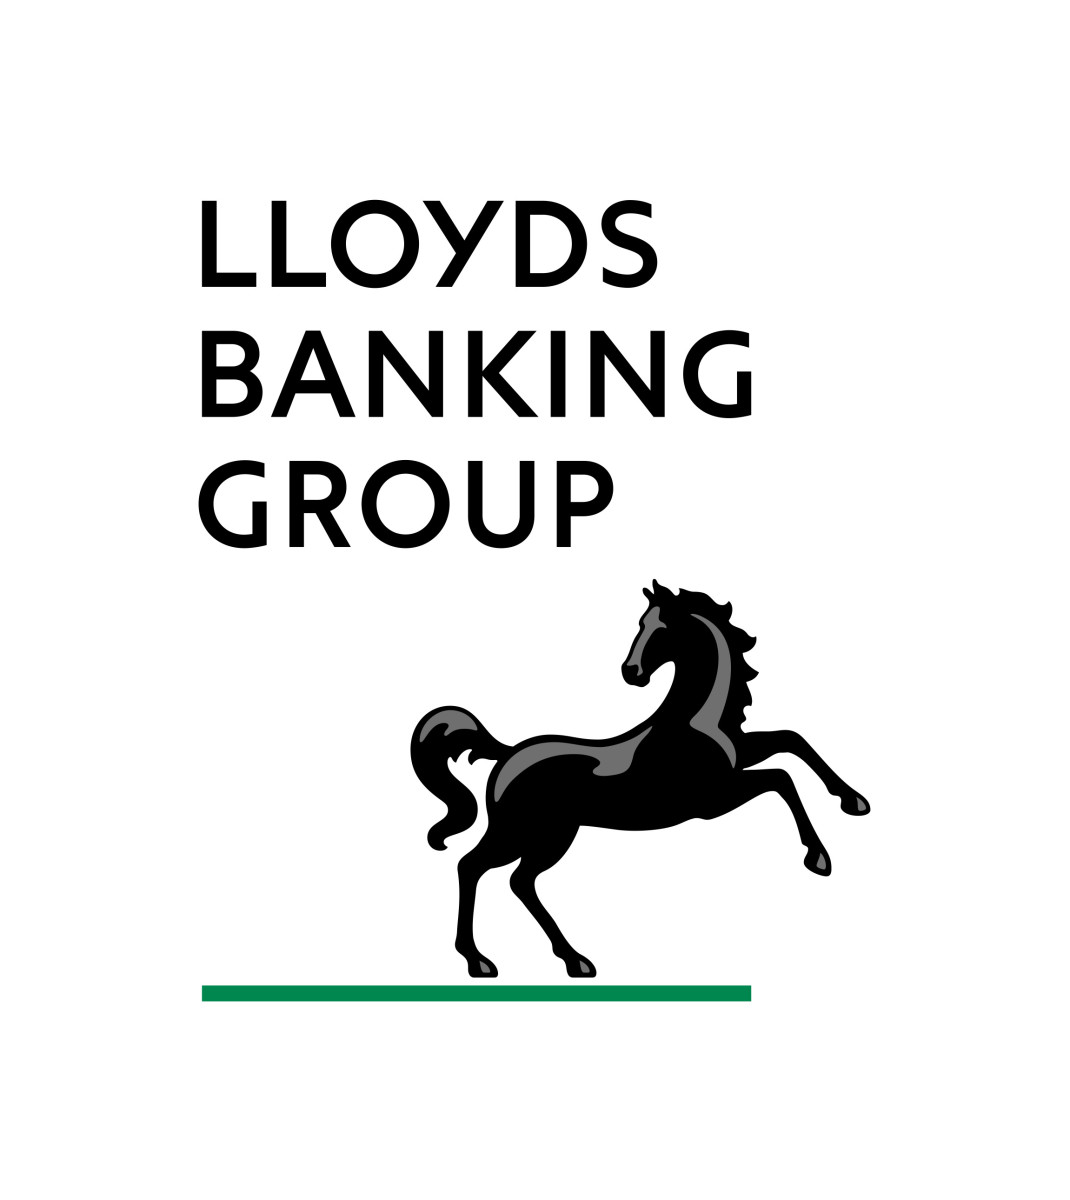 Embark Group - Lloyds Banking Group plc